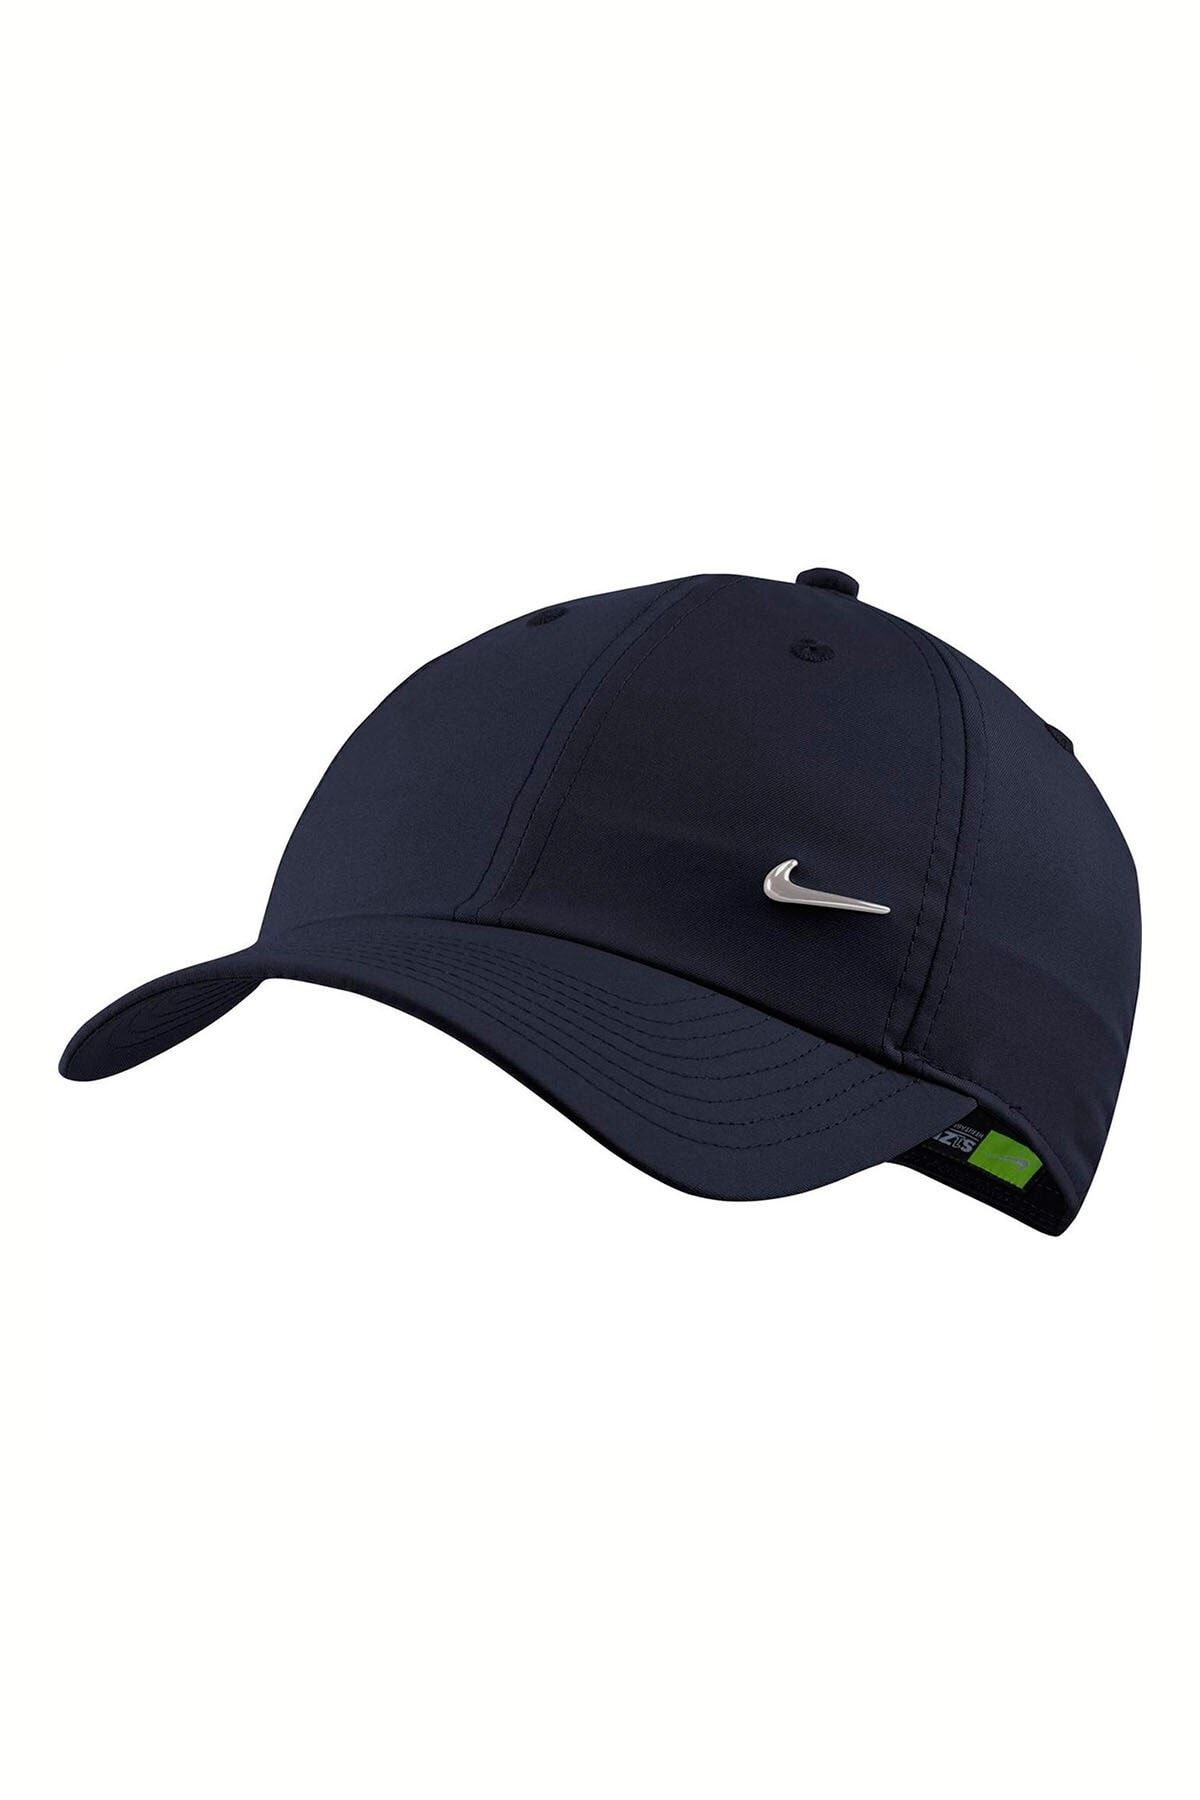 Nike Cap Metal Swoosh Şapka 943092-451